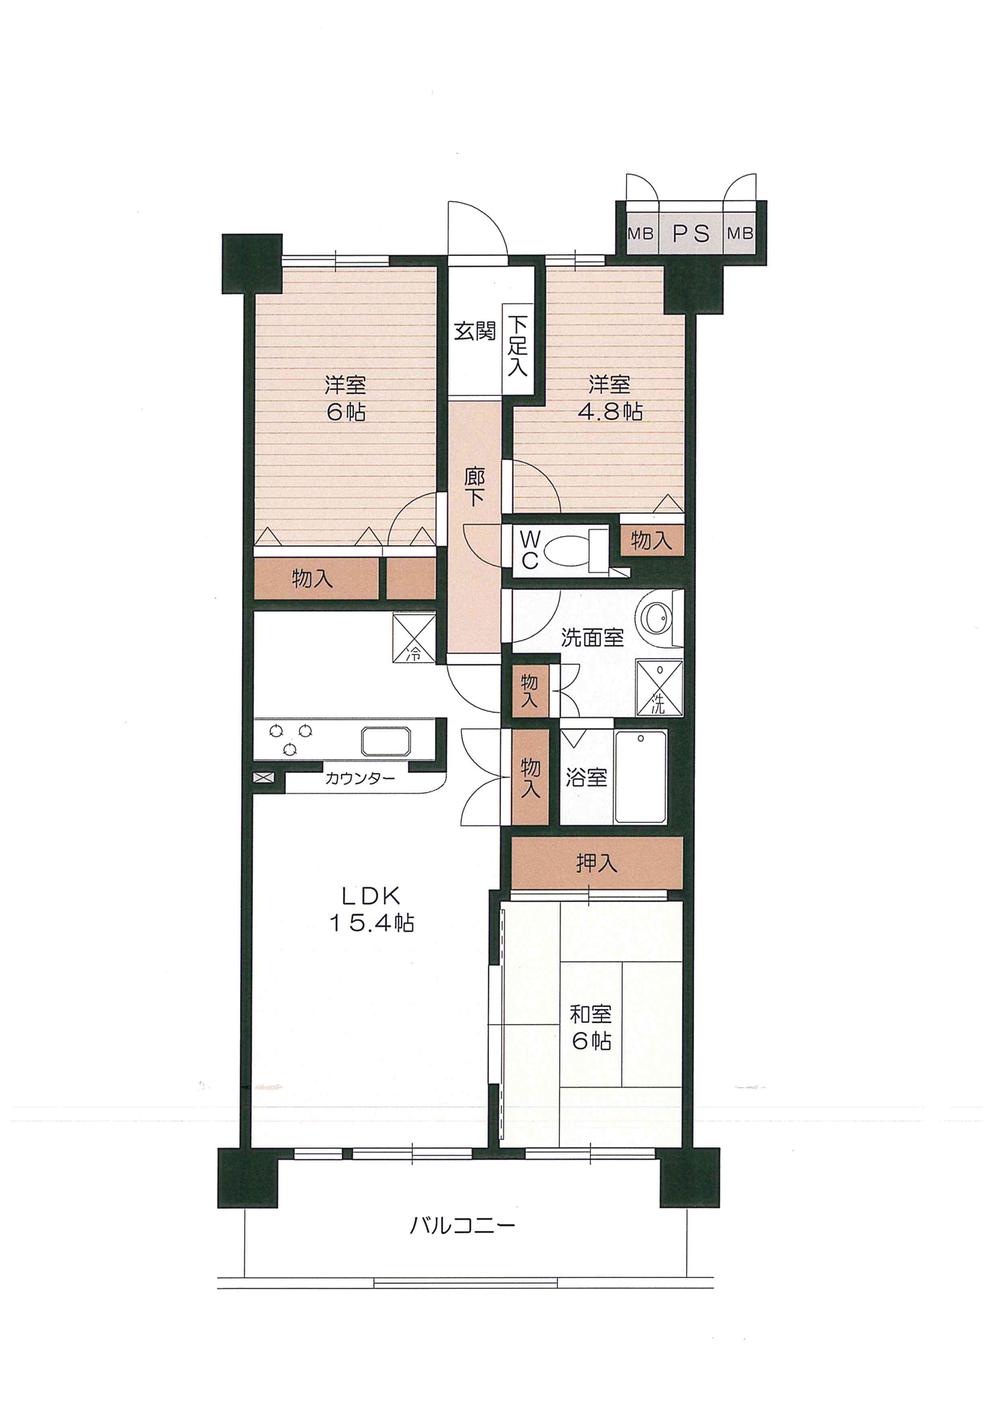 Floor plan. 3LDK, Price 13.1 million yen, Footprint 72 sq m , Balcony area 10.8 sq m